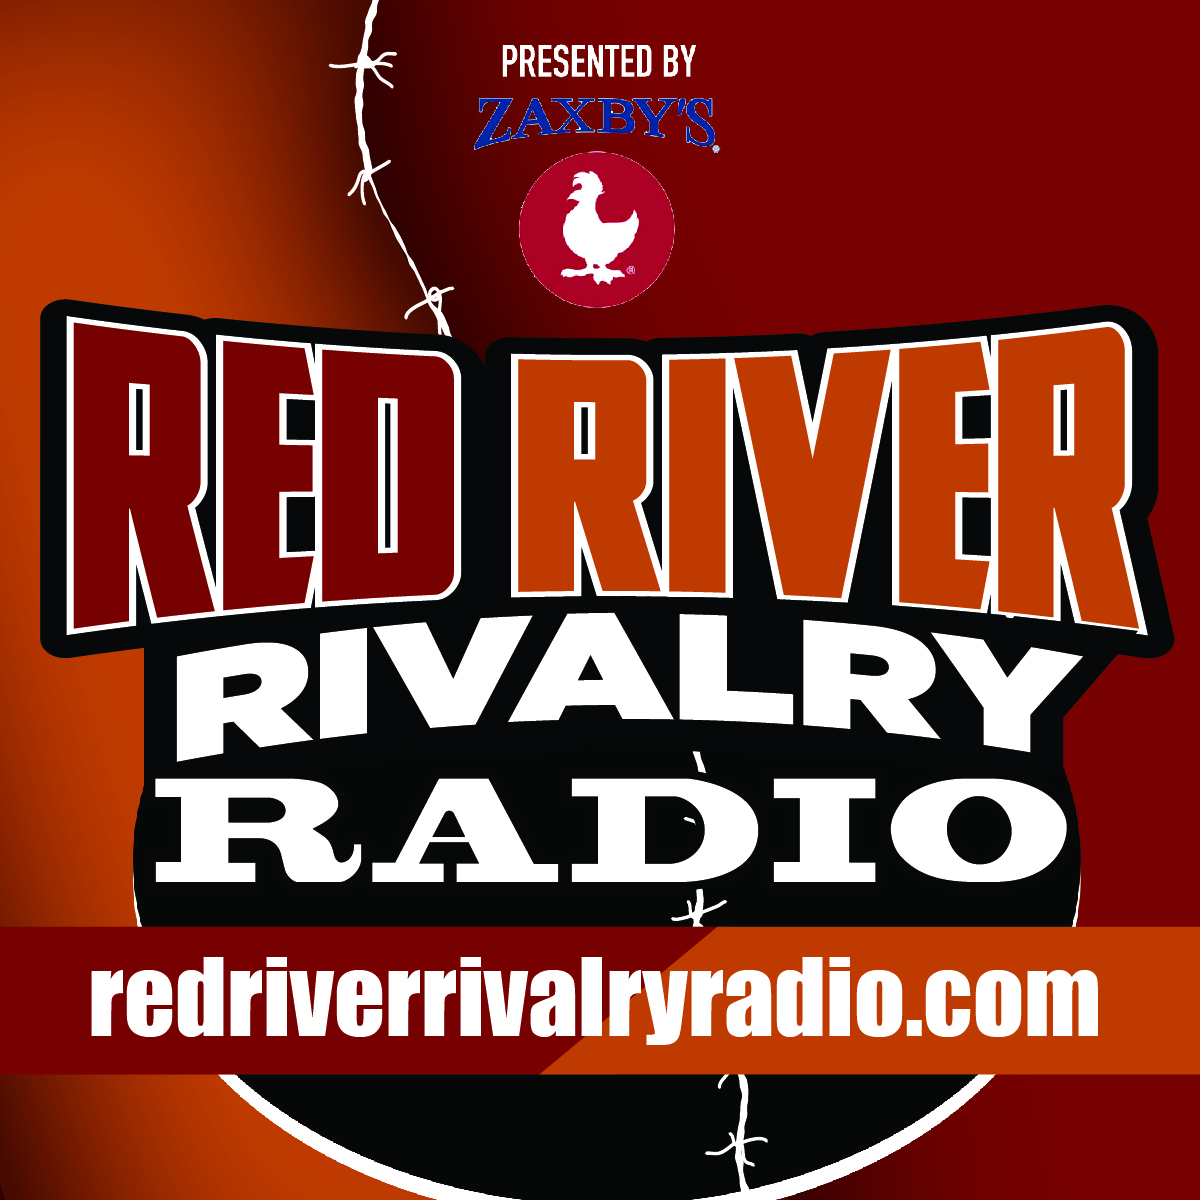 Red River Rivalry - 2015